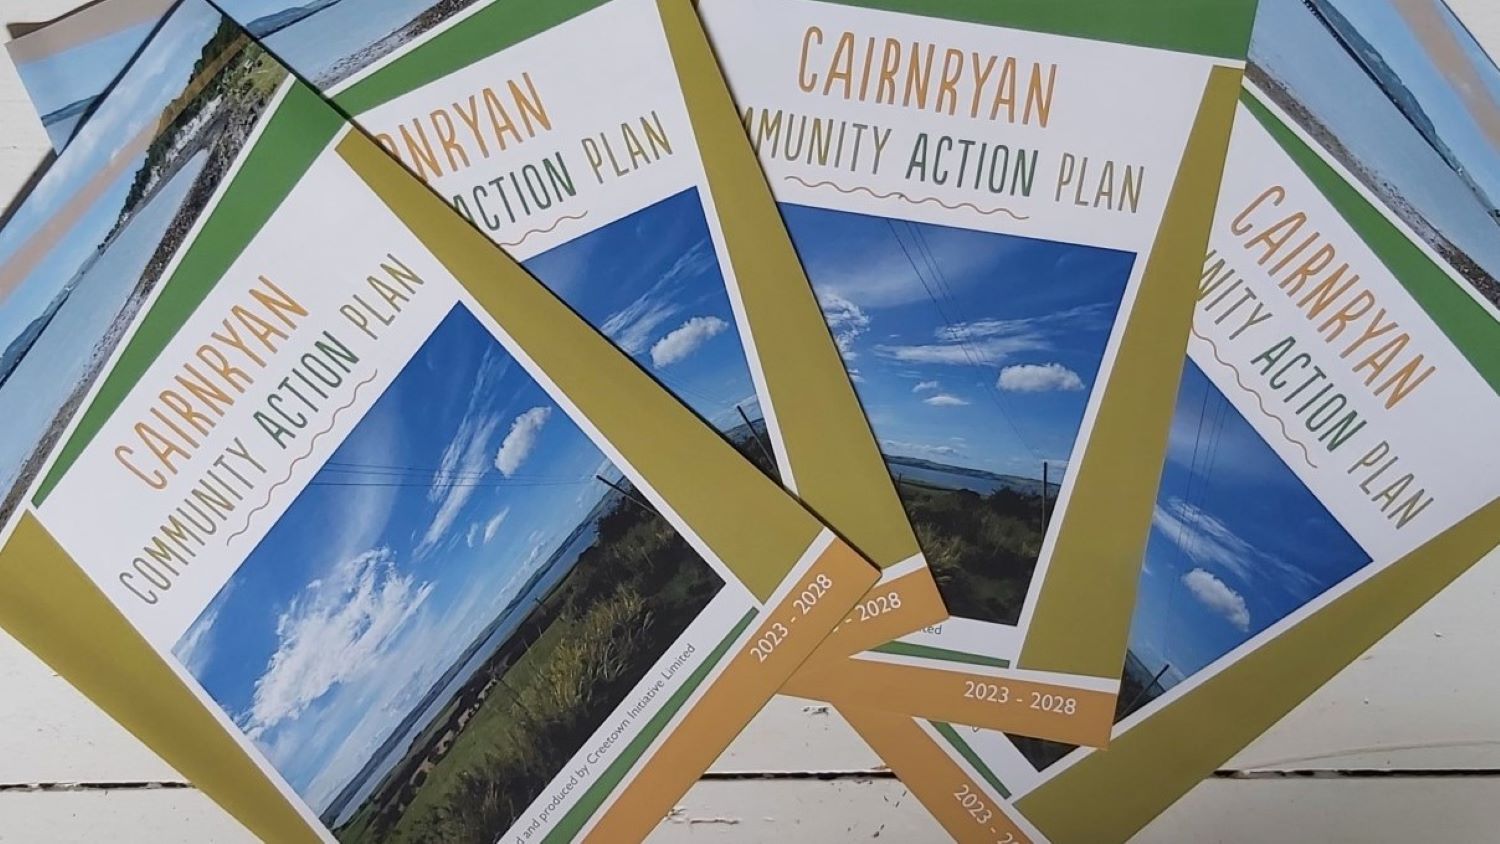 Cairnryan Community Action Plan